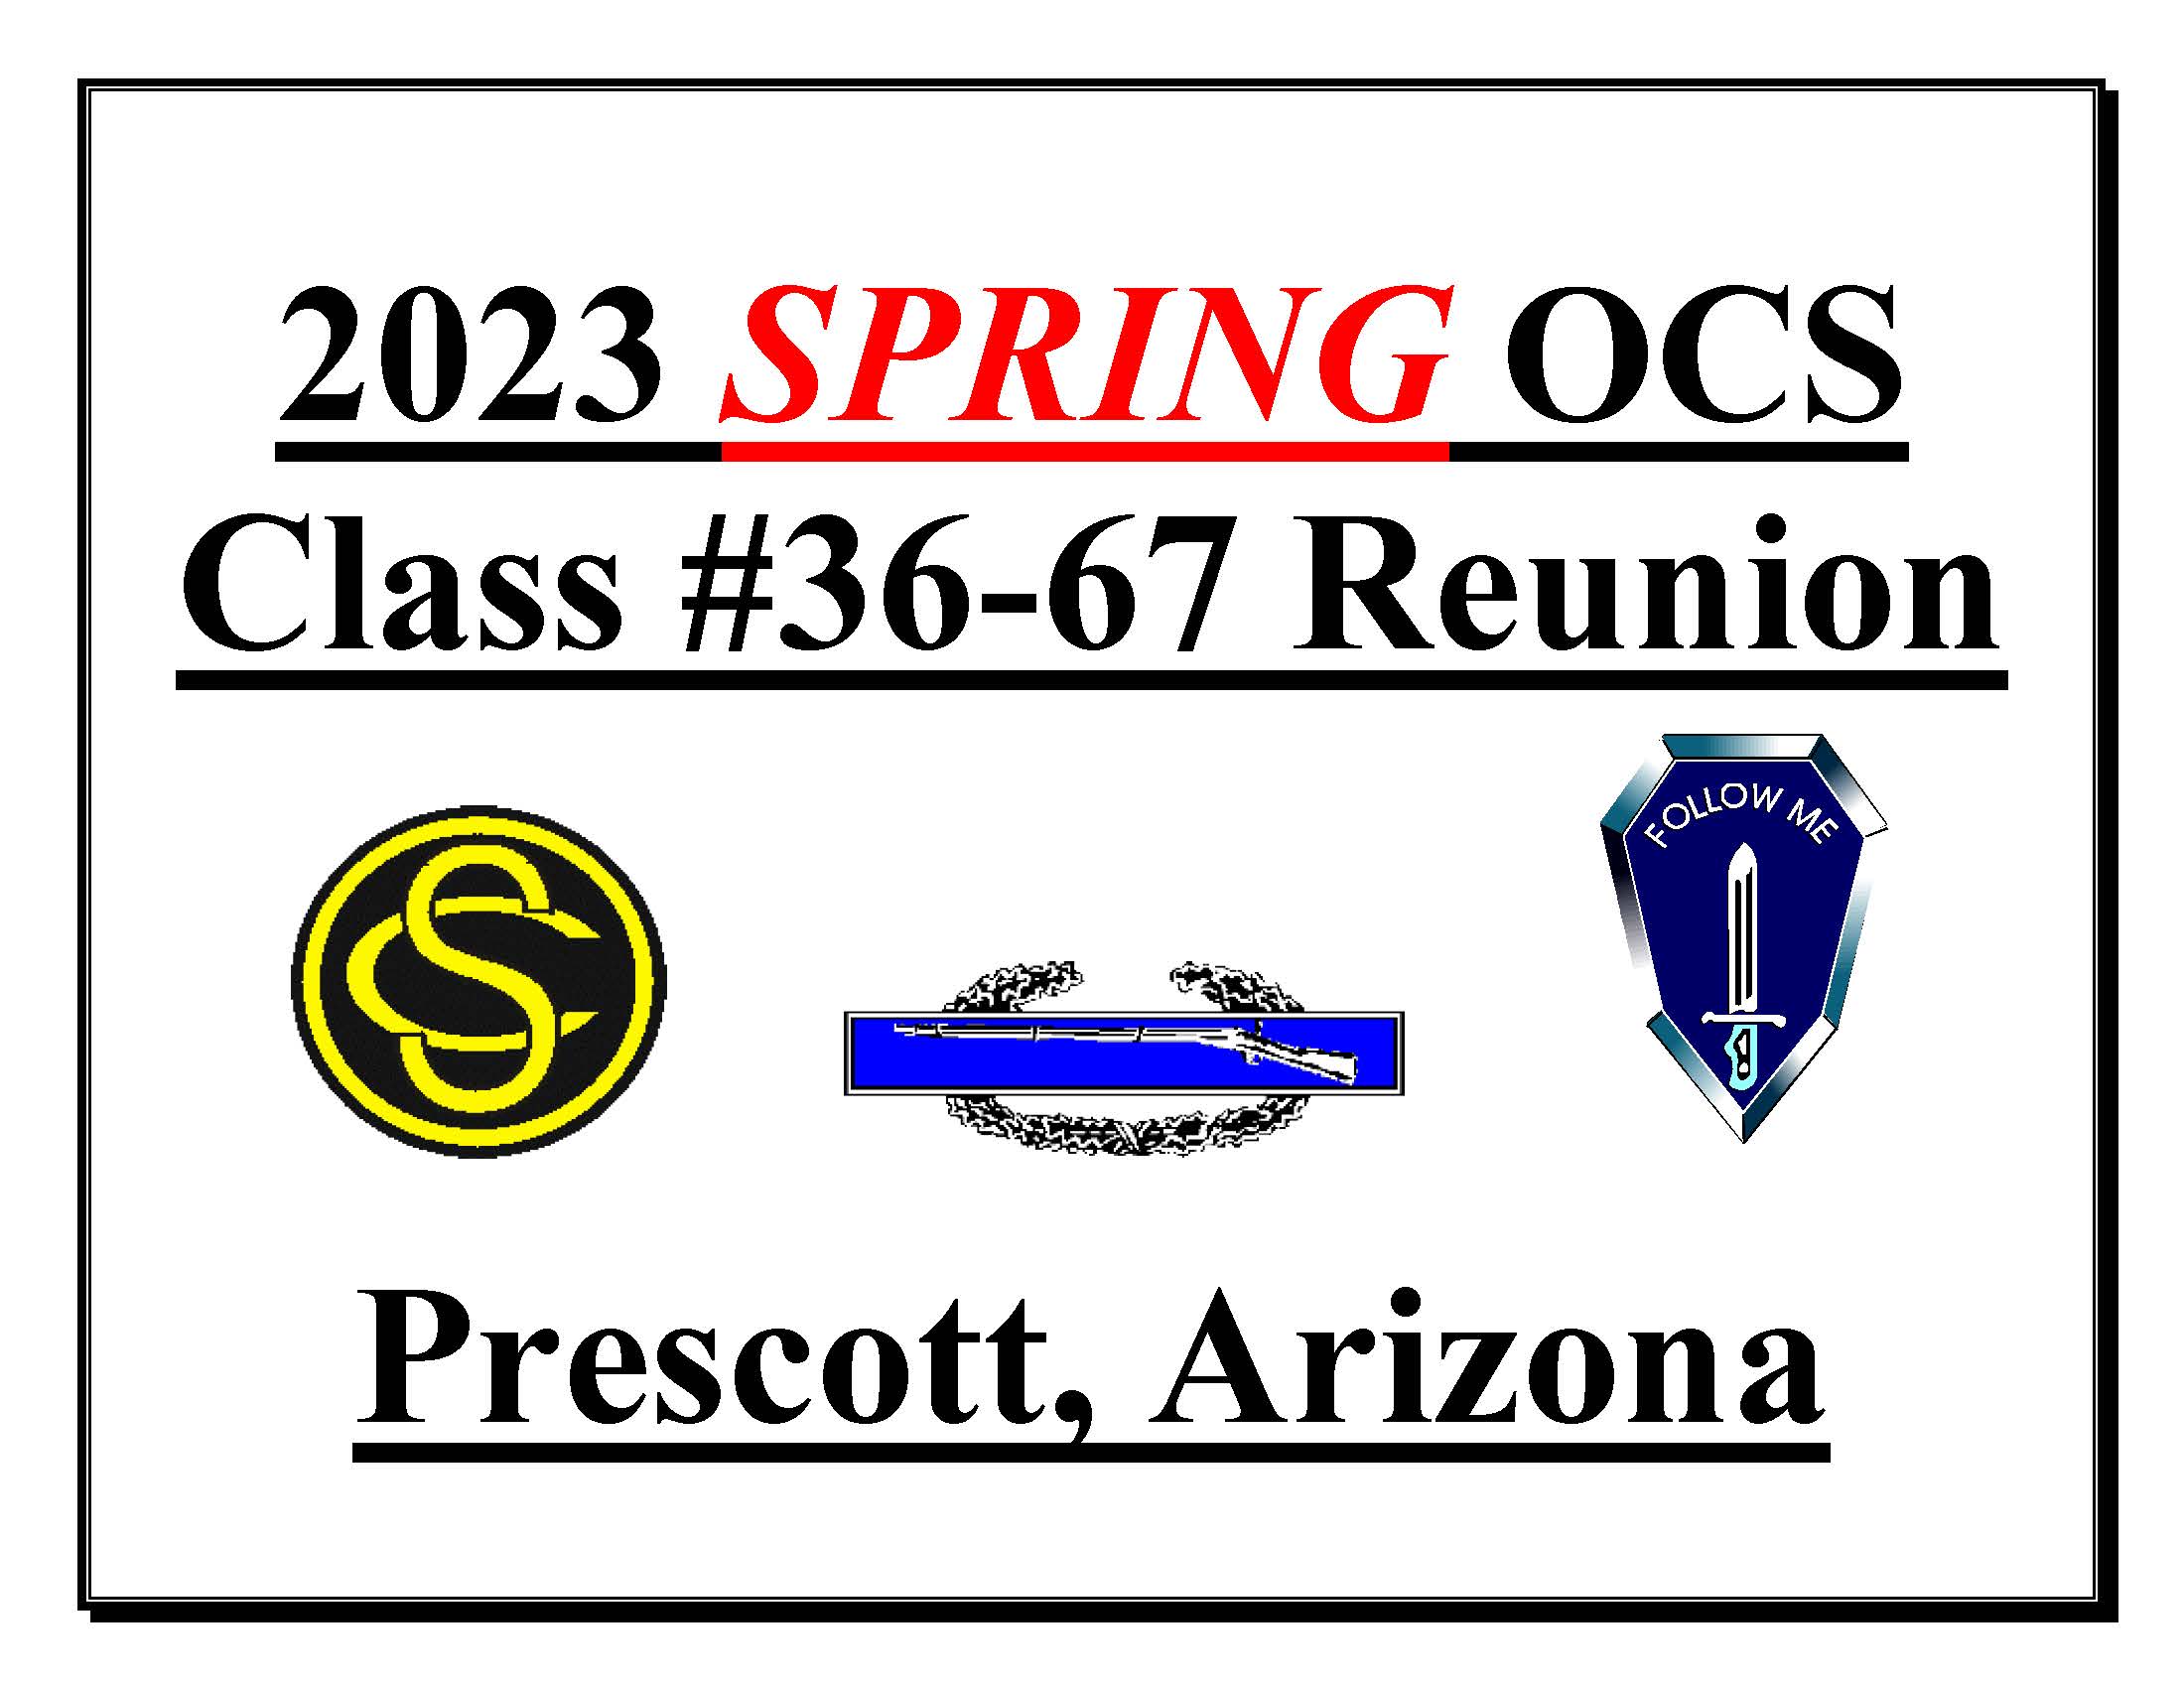 2023 SPRING OCS Class Reunion